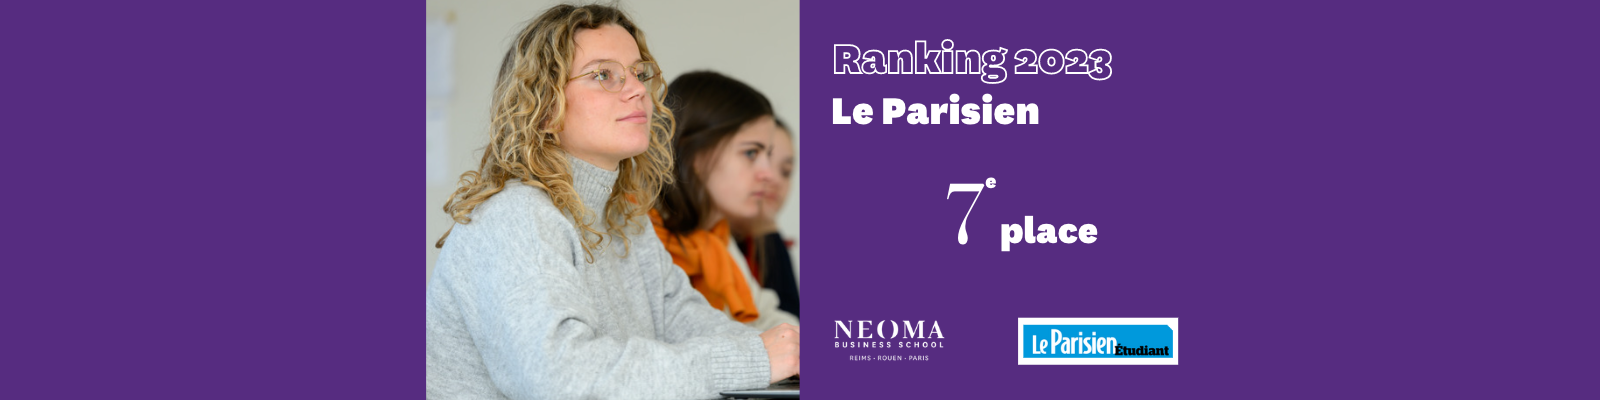 ranking-Le-Parisien-2023-NEOMA-7th